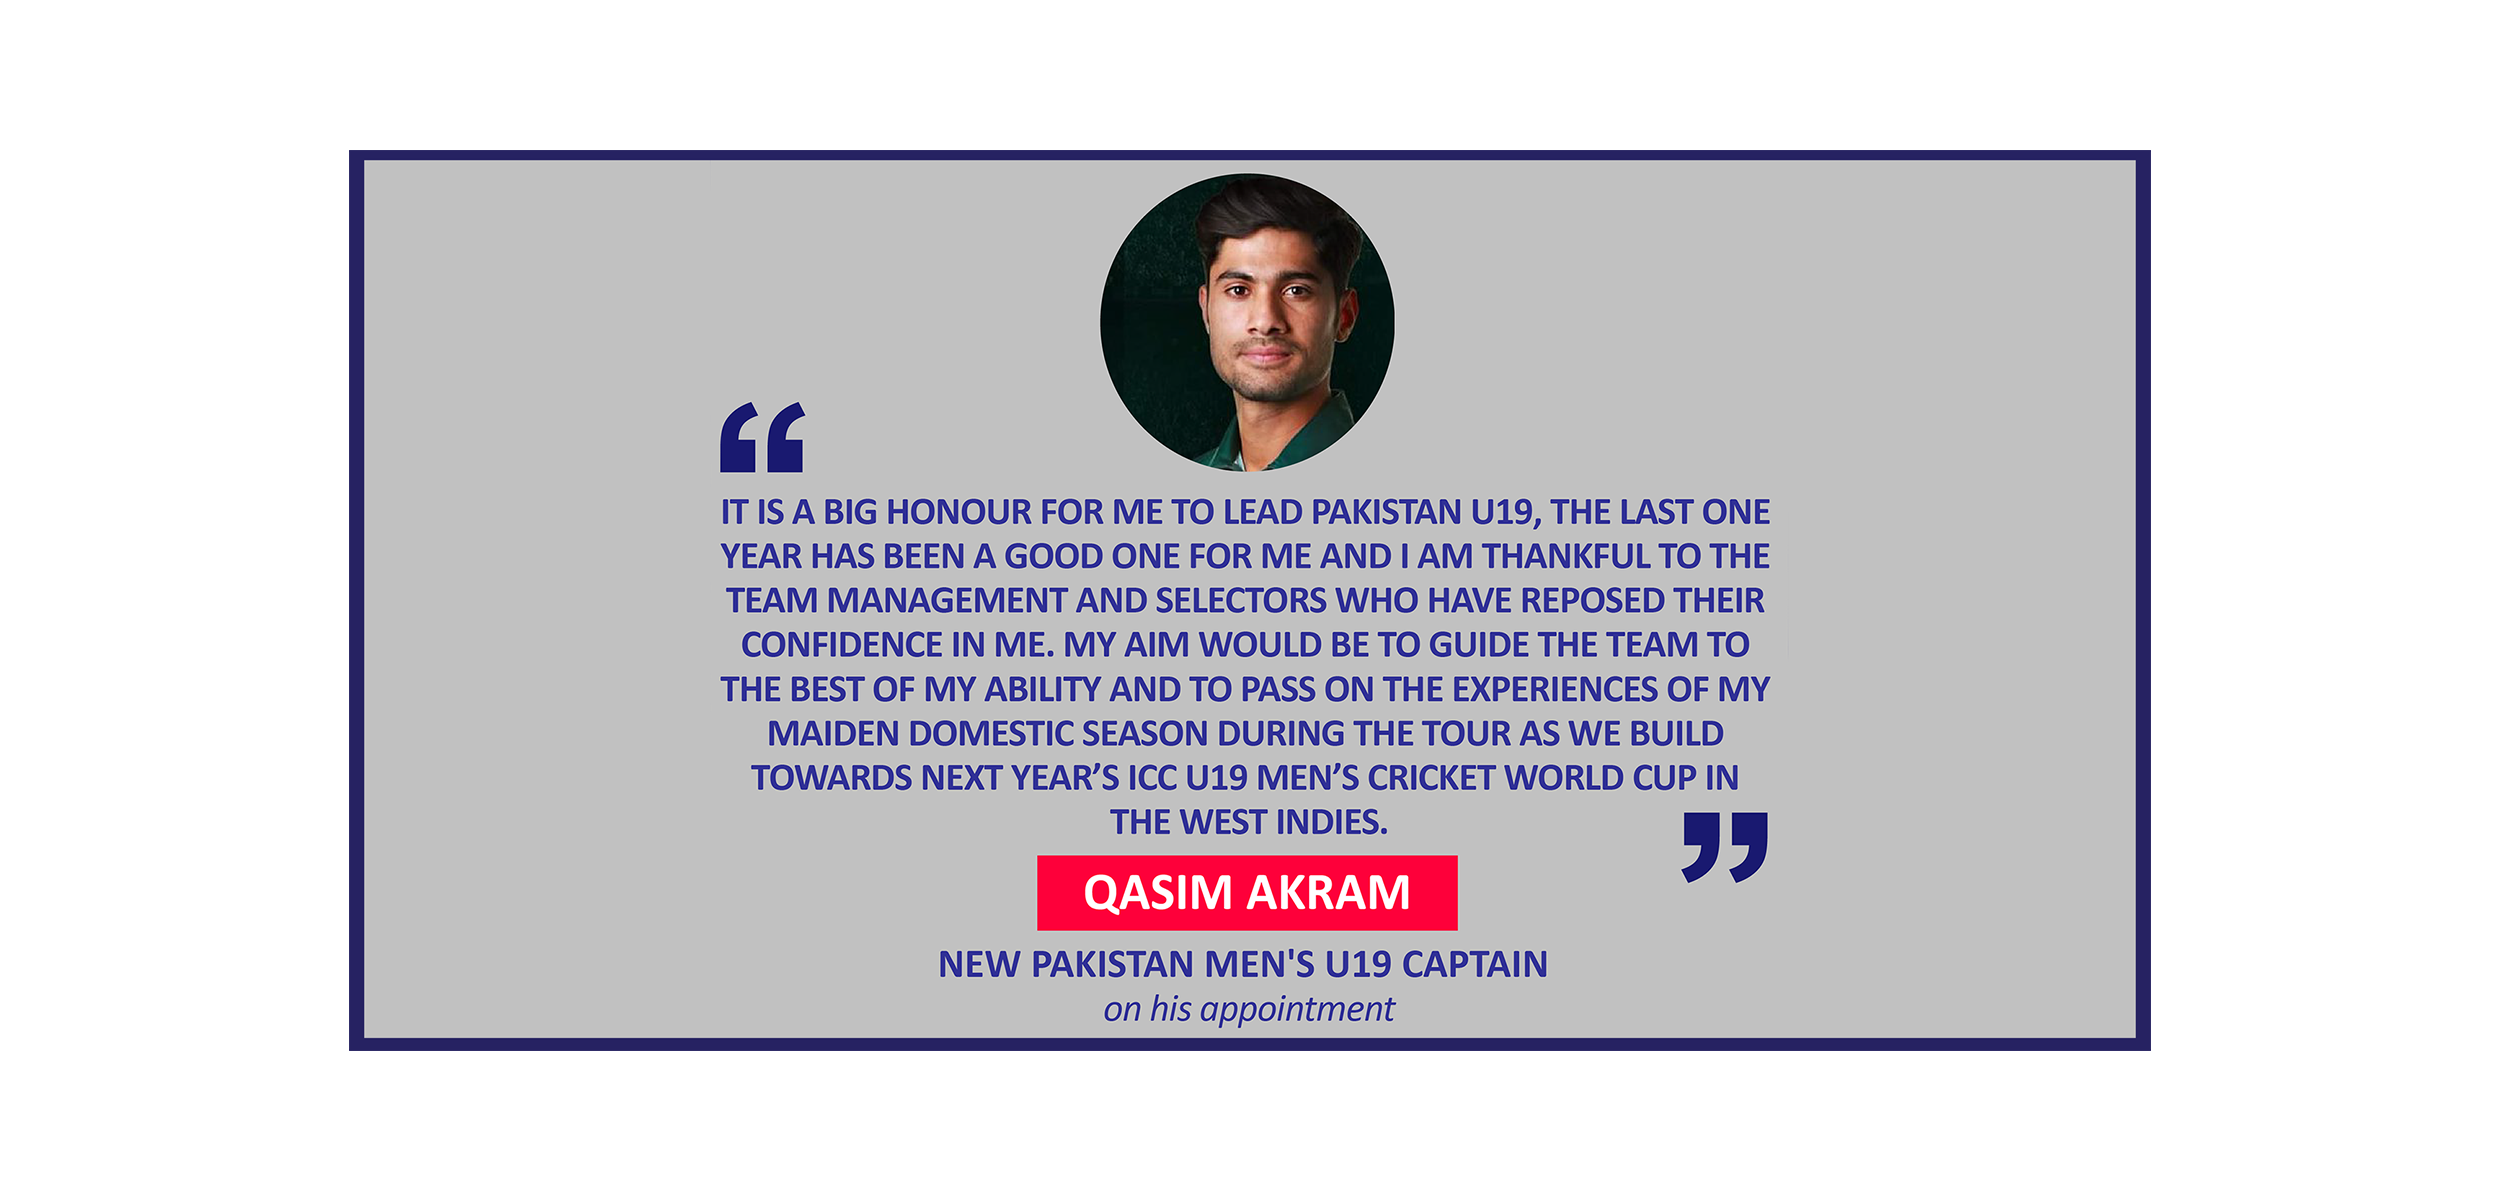 Qasim Akram, new Pakistan Men's U19 Captain on his appointment